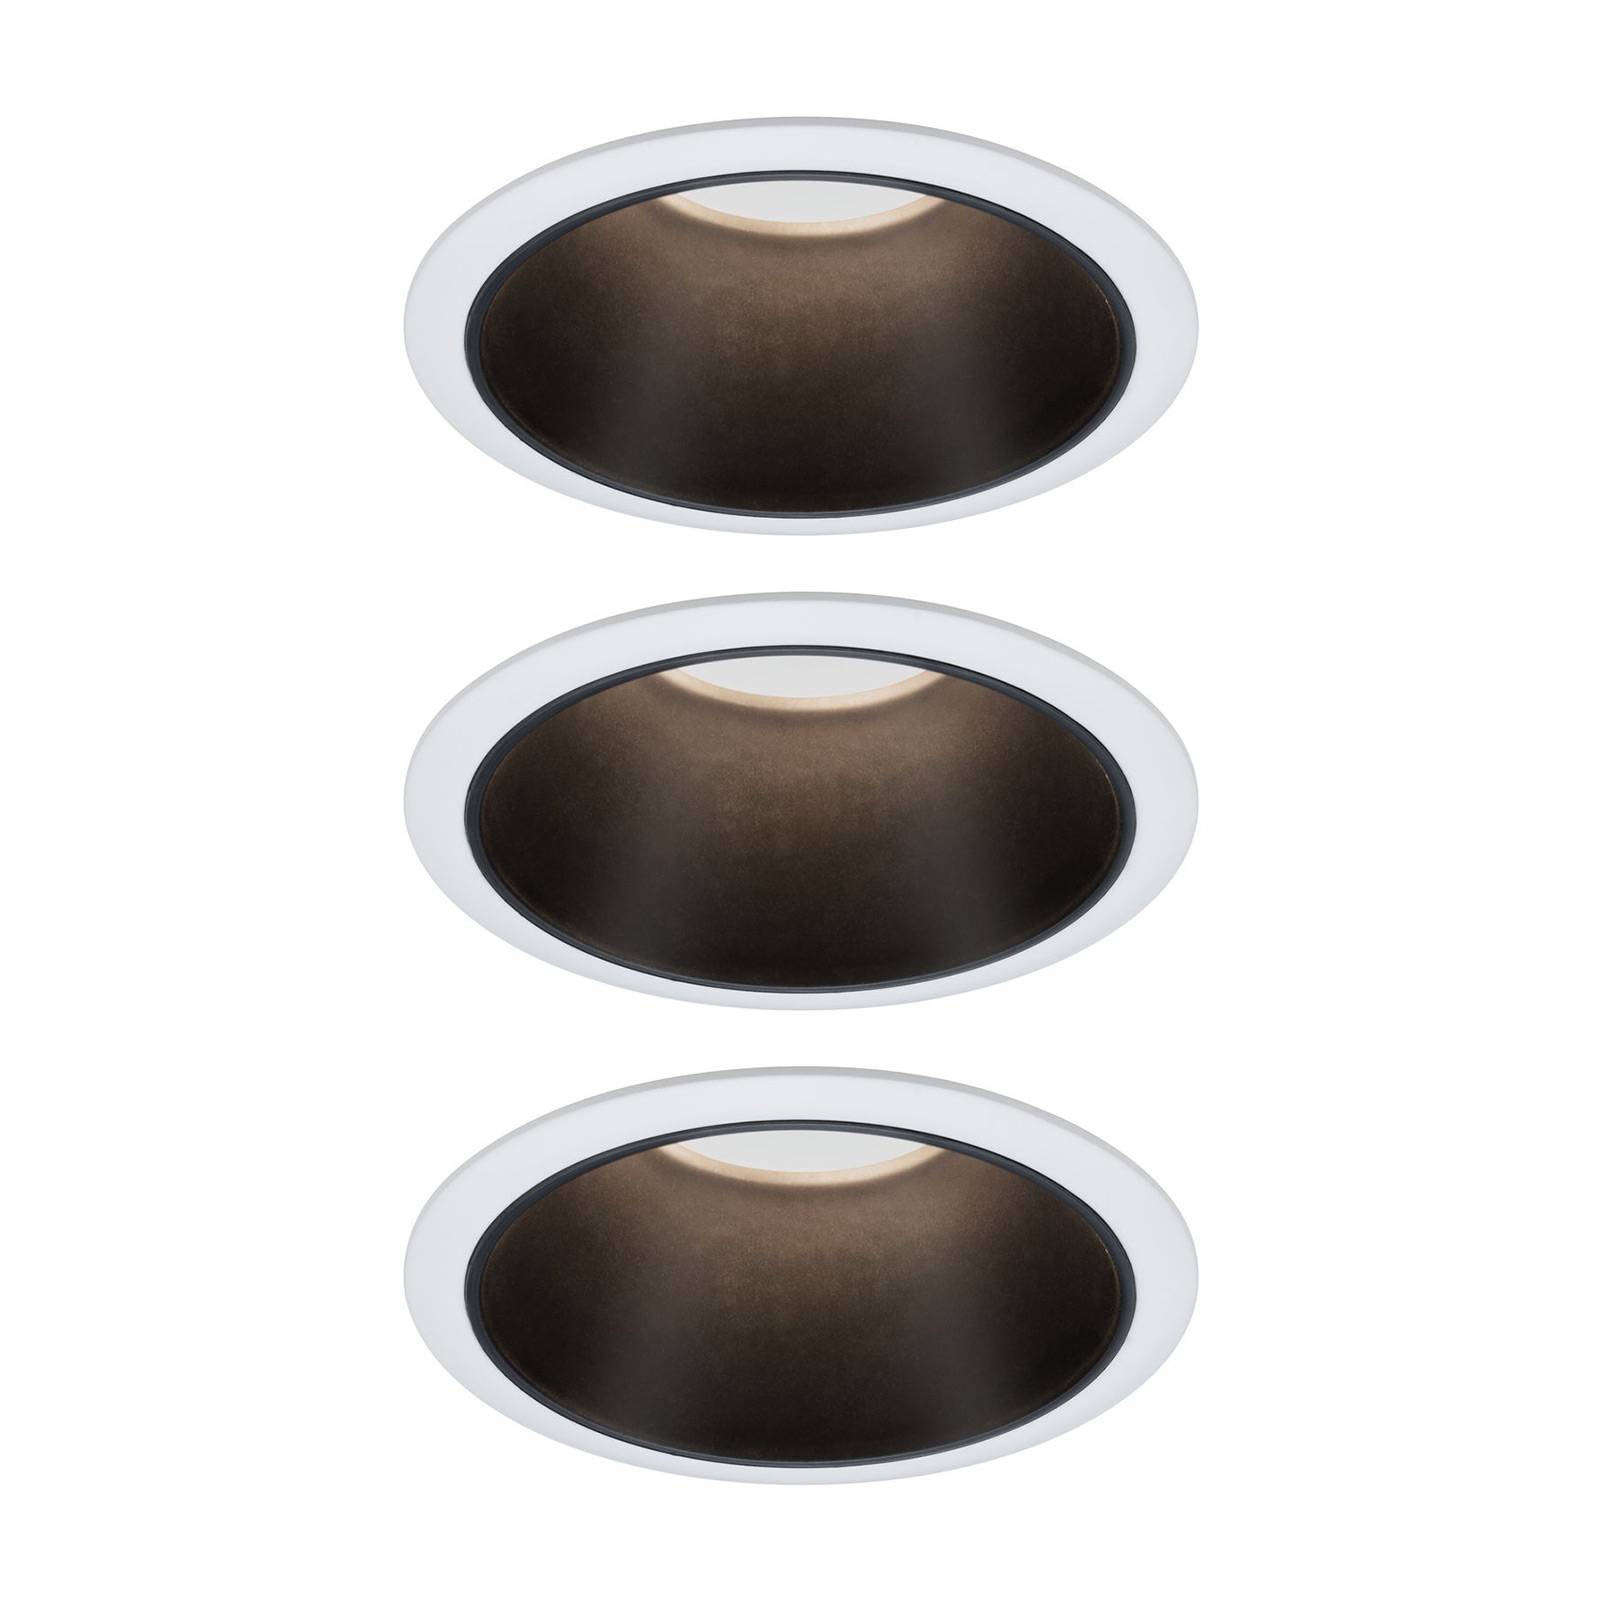 Paulmann Cole bodové LED, čierno-biele 3 kusy